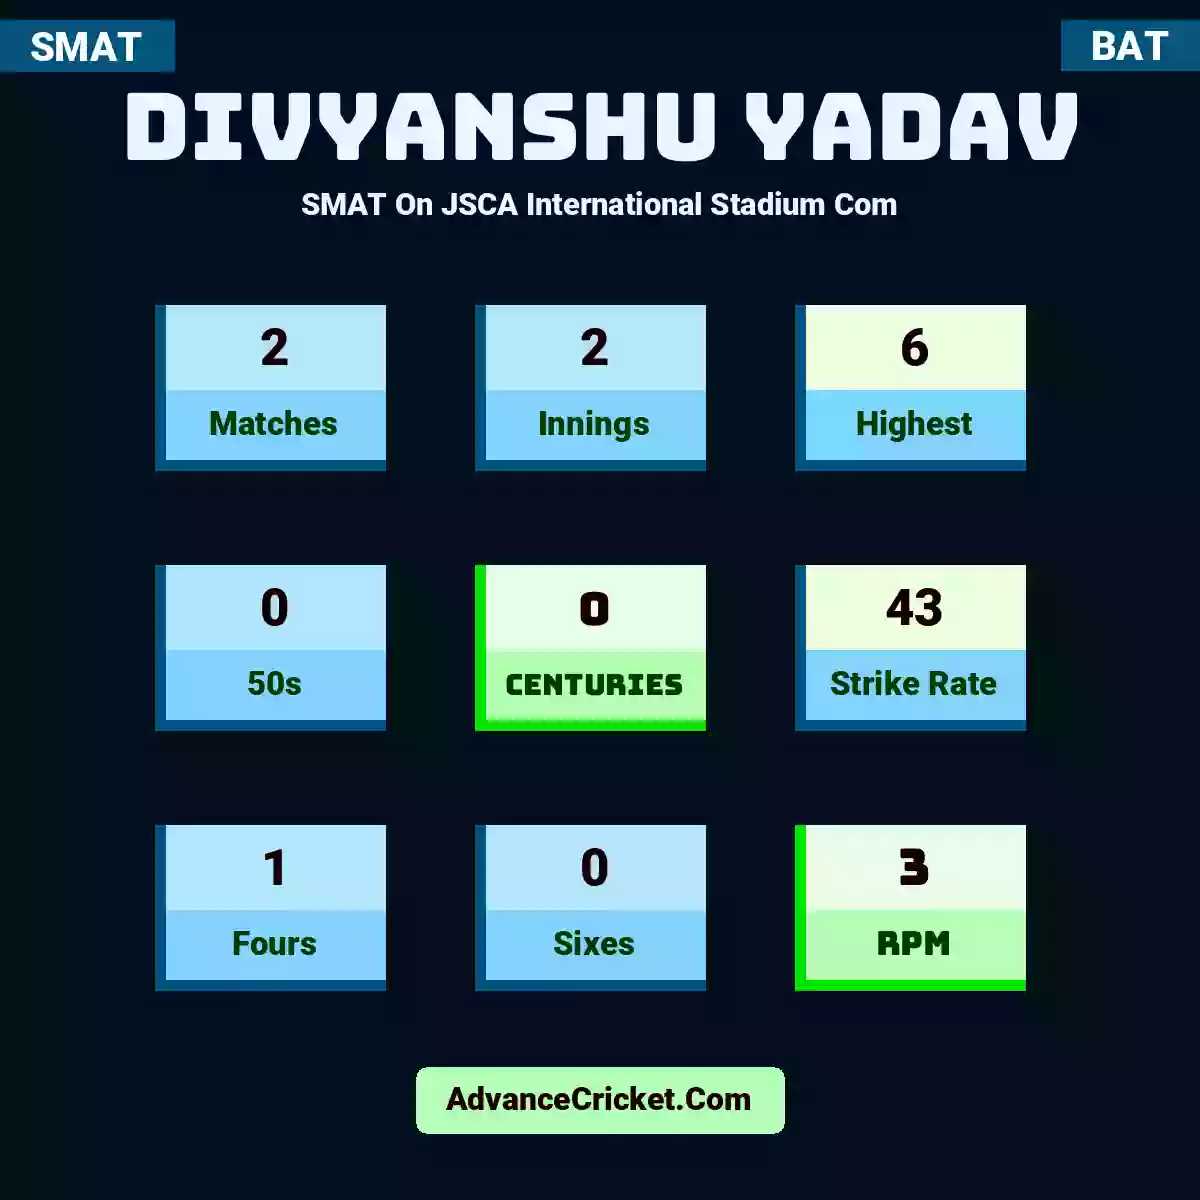 Divyanshu Yadav SMAT  On JSCA International Stadium Com, Divyanshu Yadav played 2 matches, scored 6 runs as highest, 0 half-centuries, and 0 centuries, with a strike rate of 43. D.Yadav hit 1 fours and 0 sixes, with an RPM of 3.